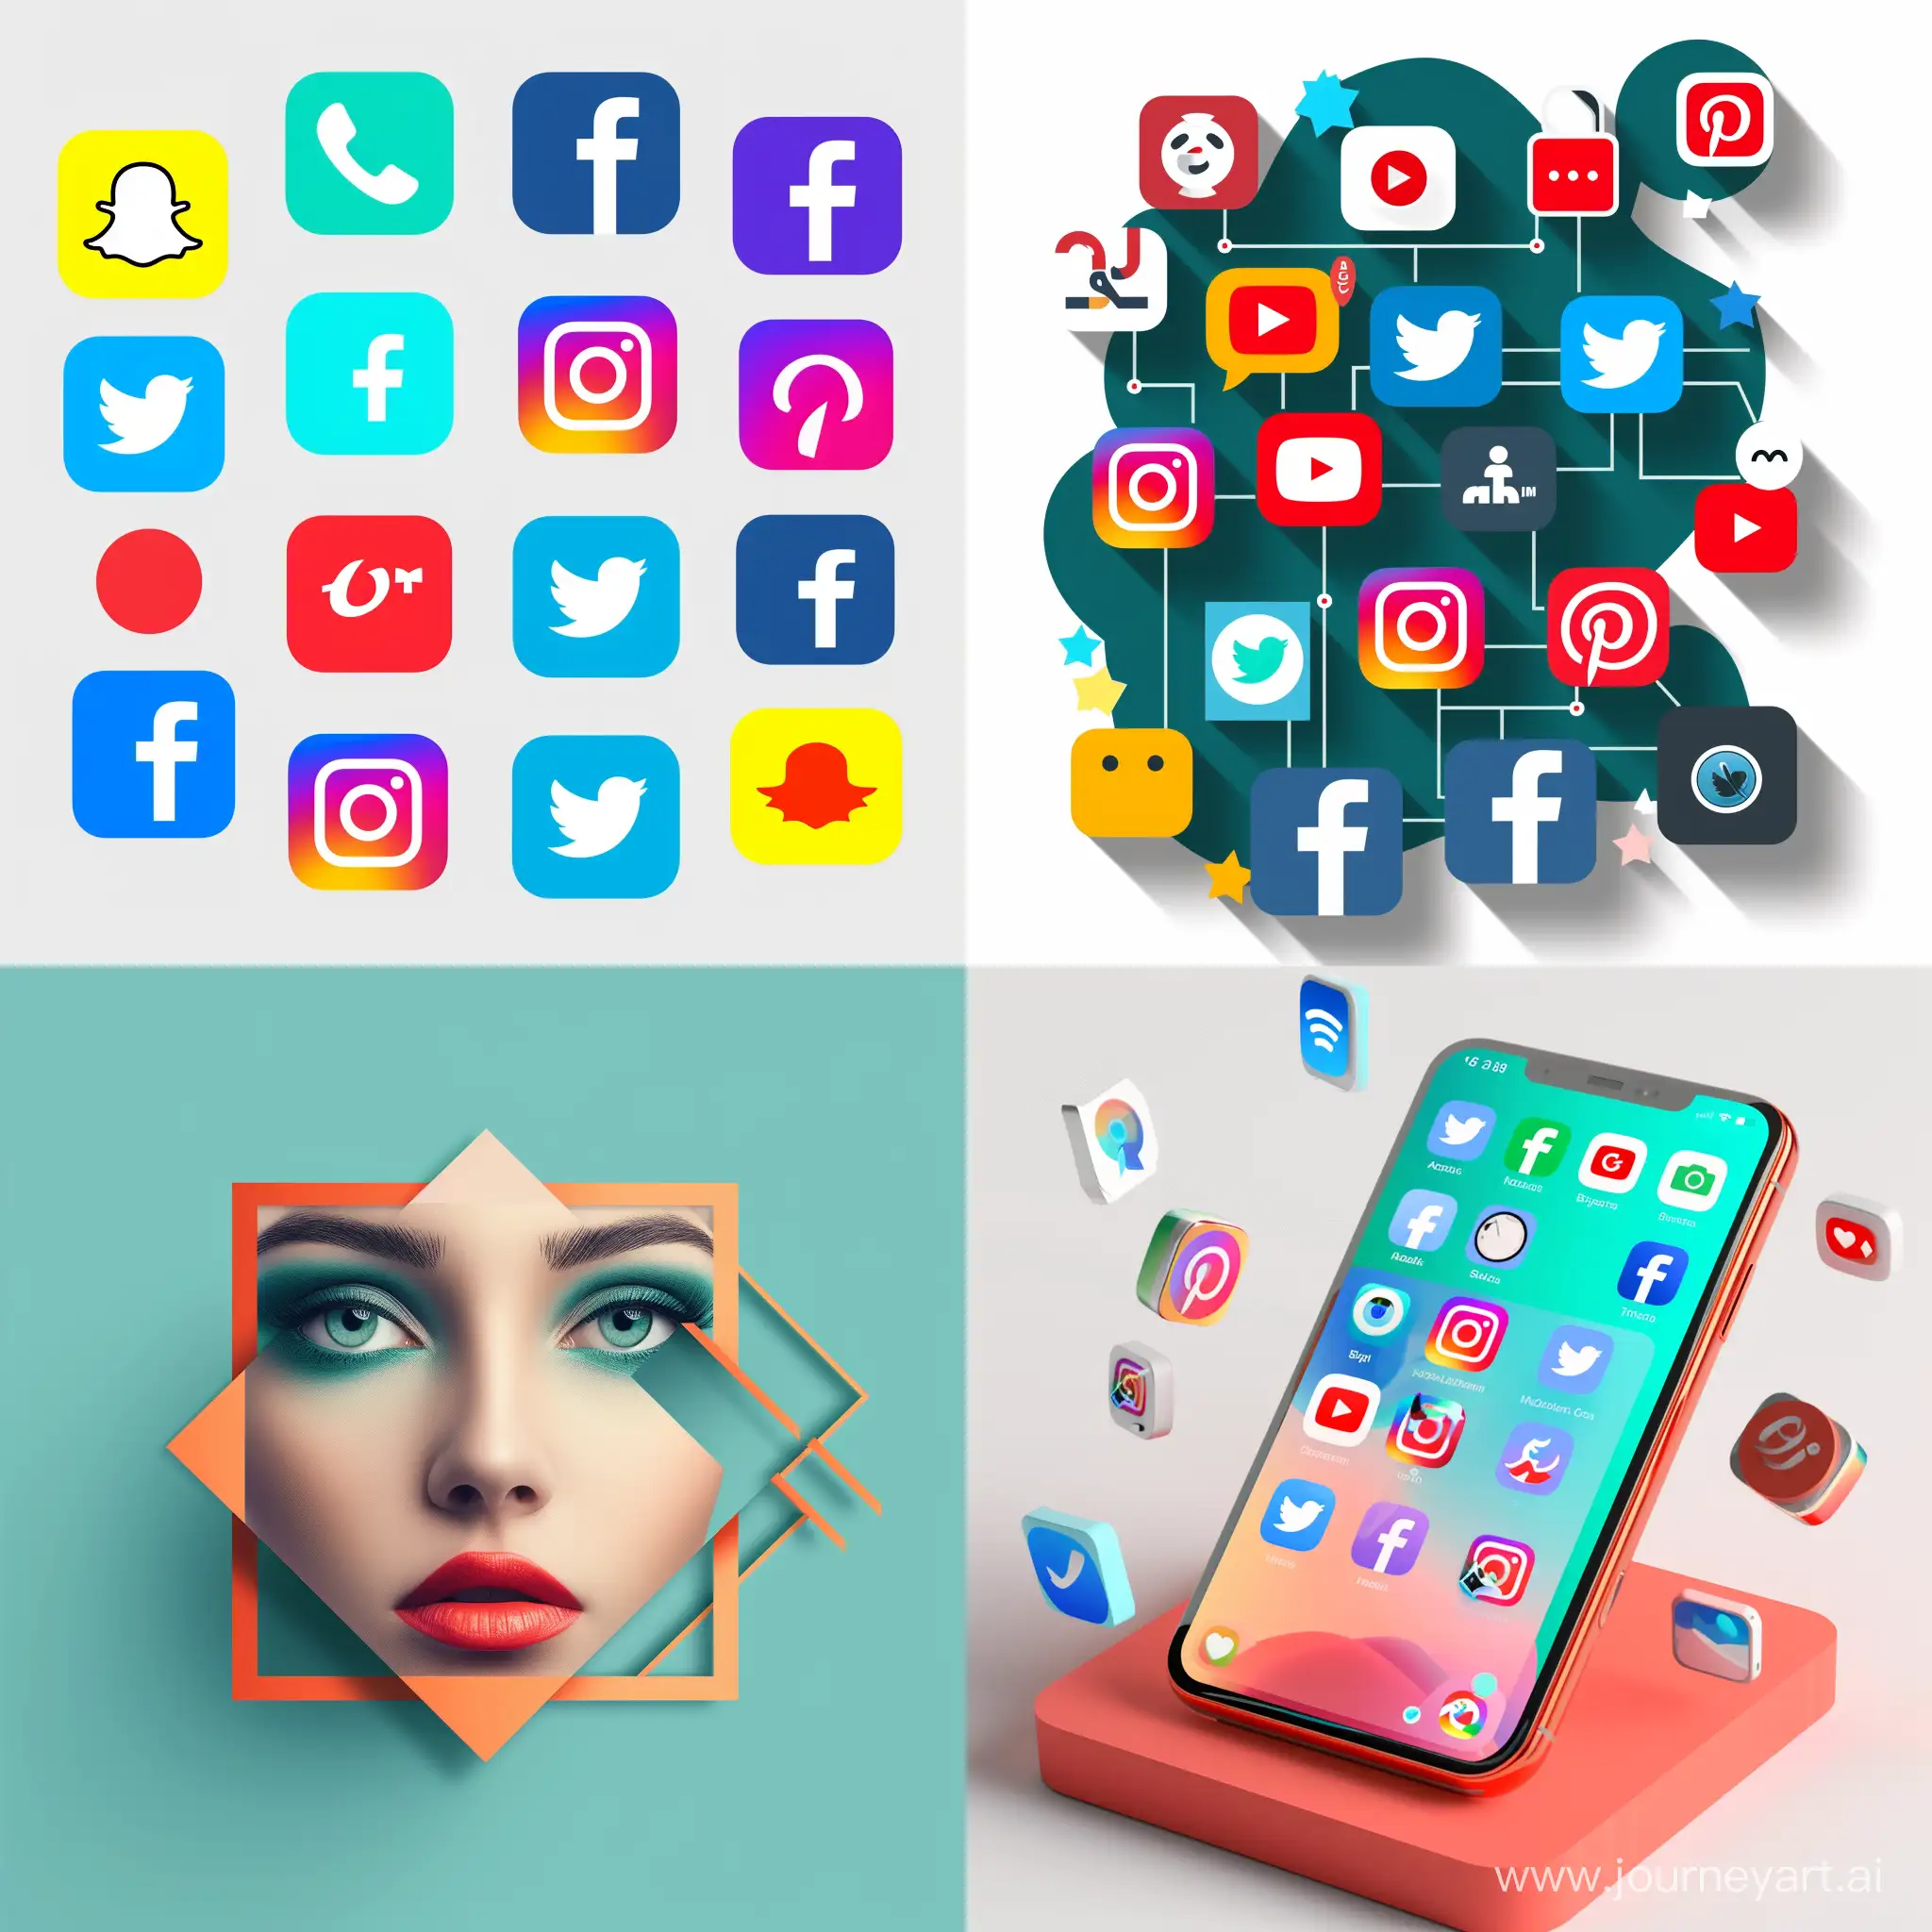 Vibrant-Social-Media-Post-Design-with-Versatile-Visual-Elements